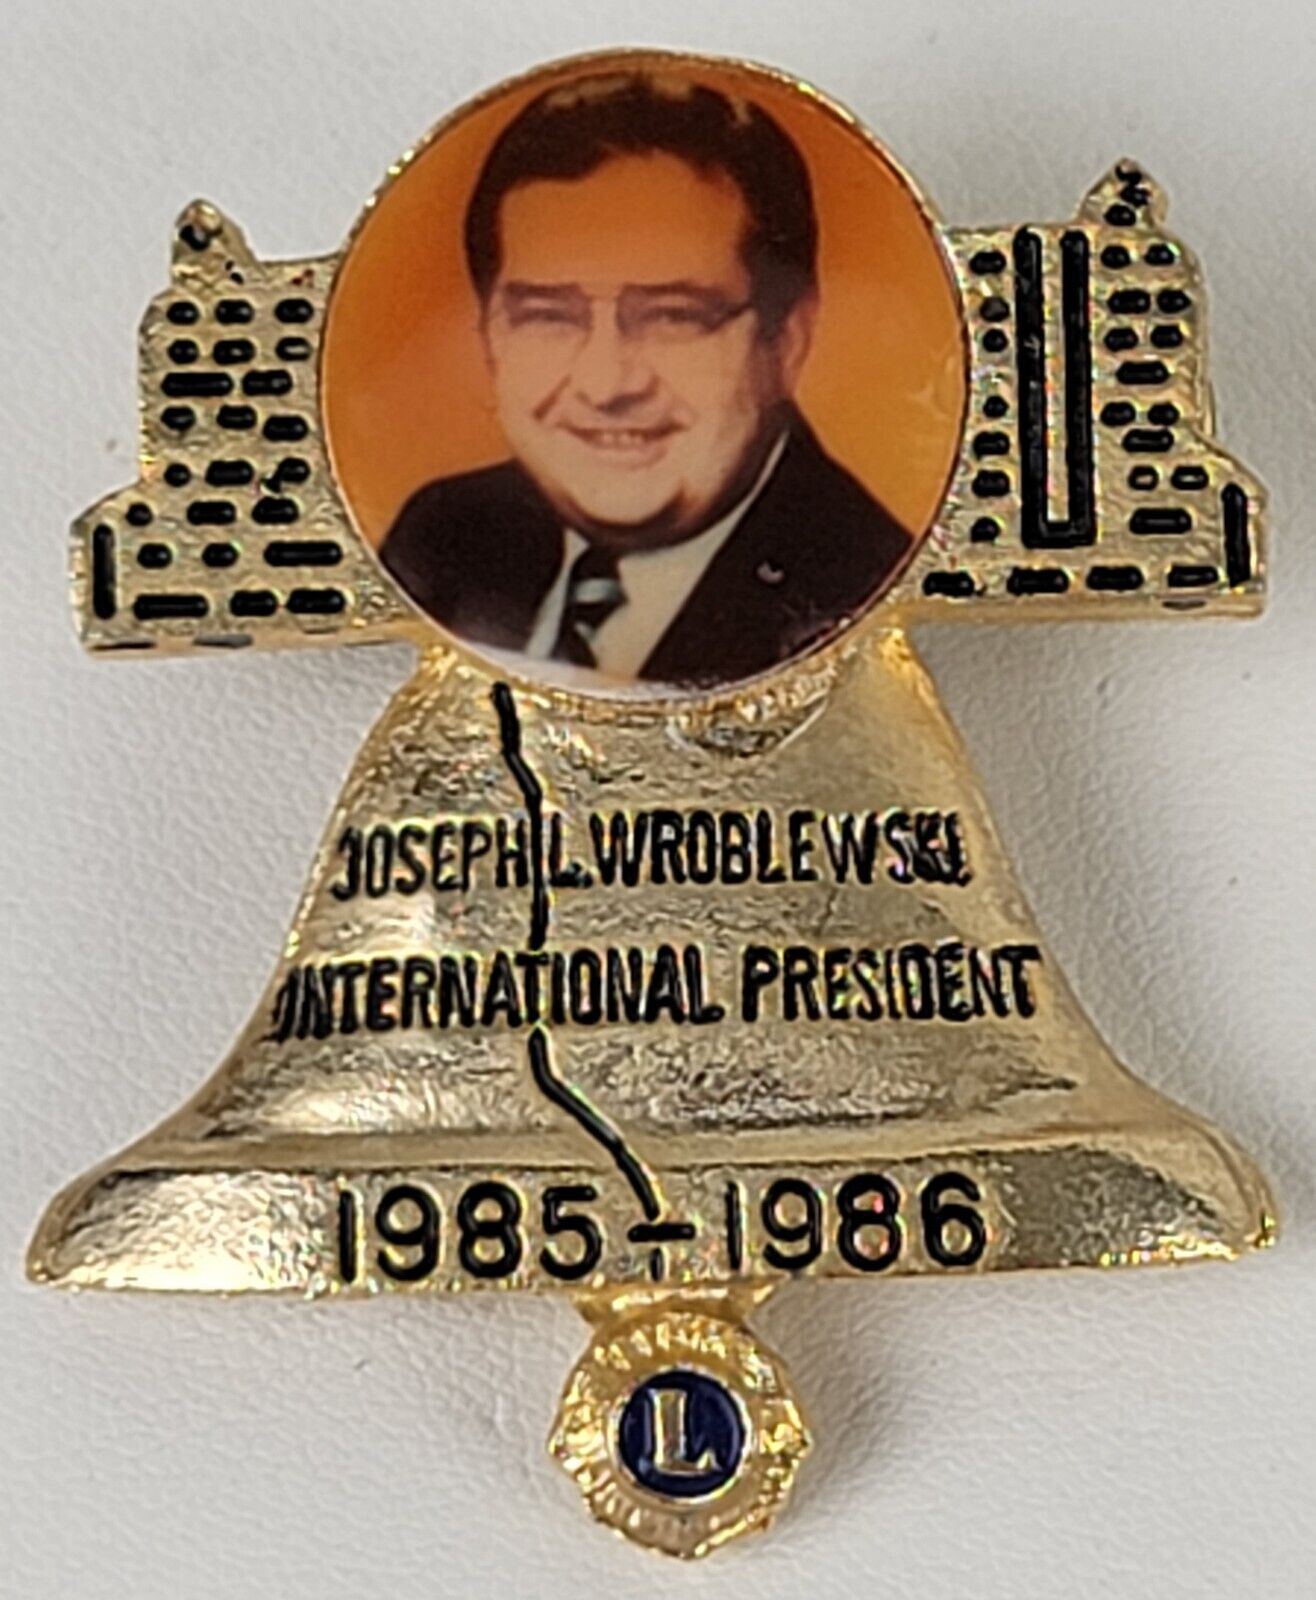 Rare 1985-86 Vtg Lions Club International President Pin Joseph L. Wroblewski